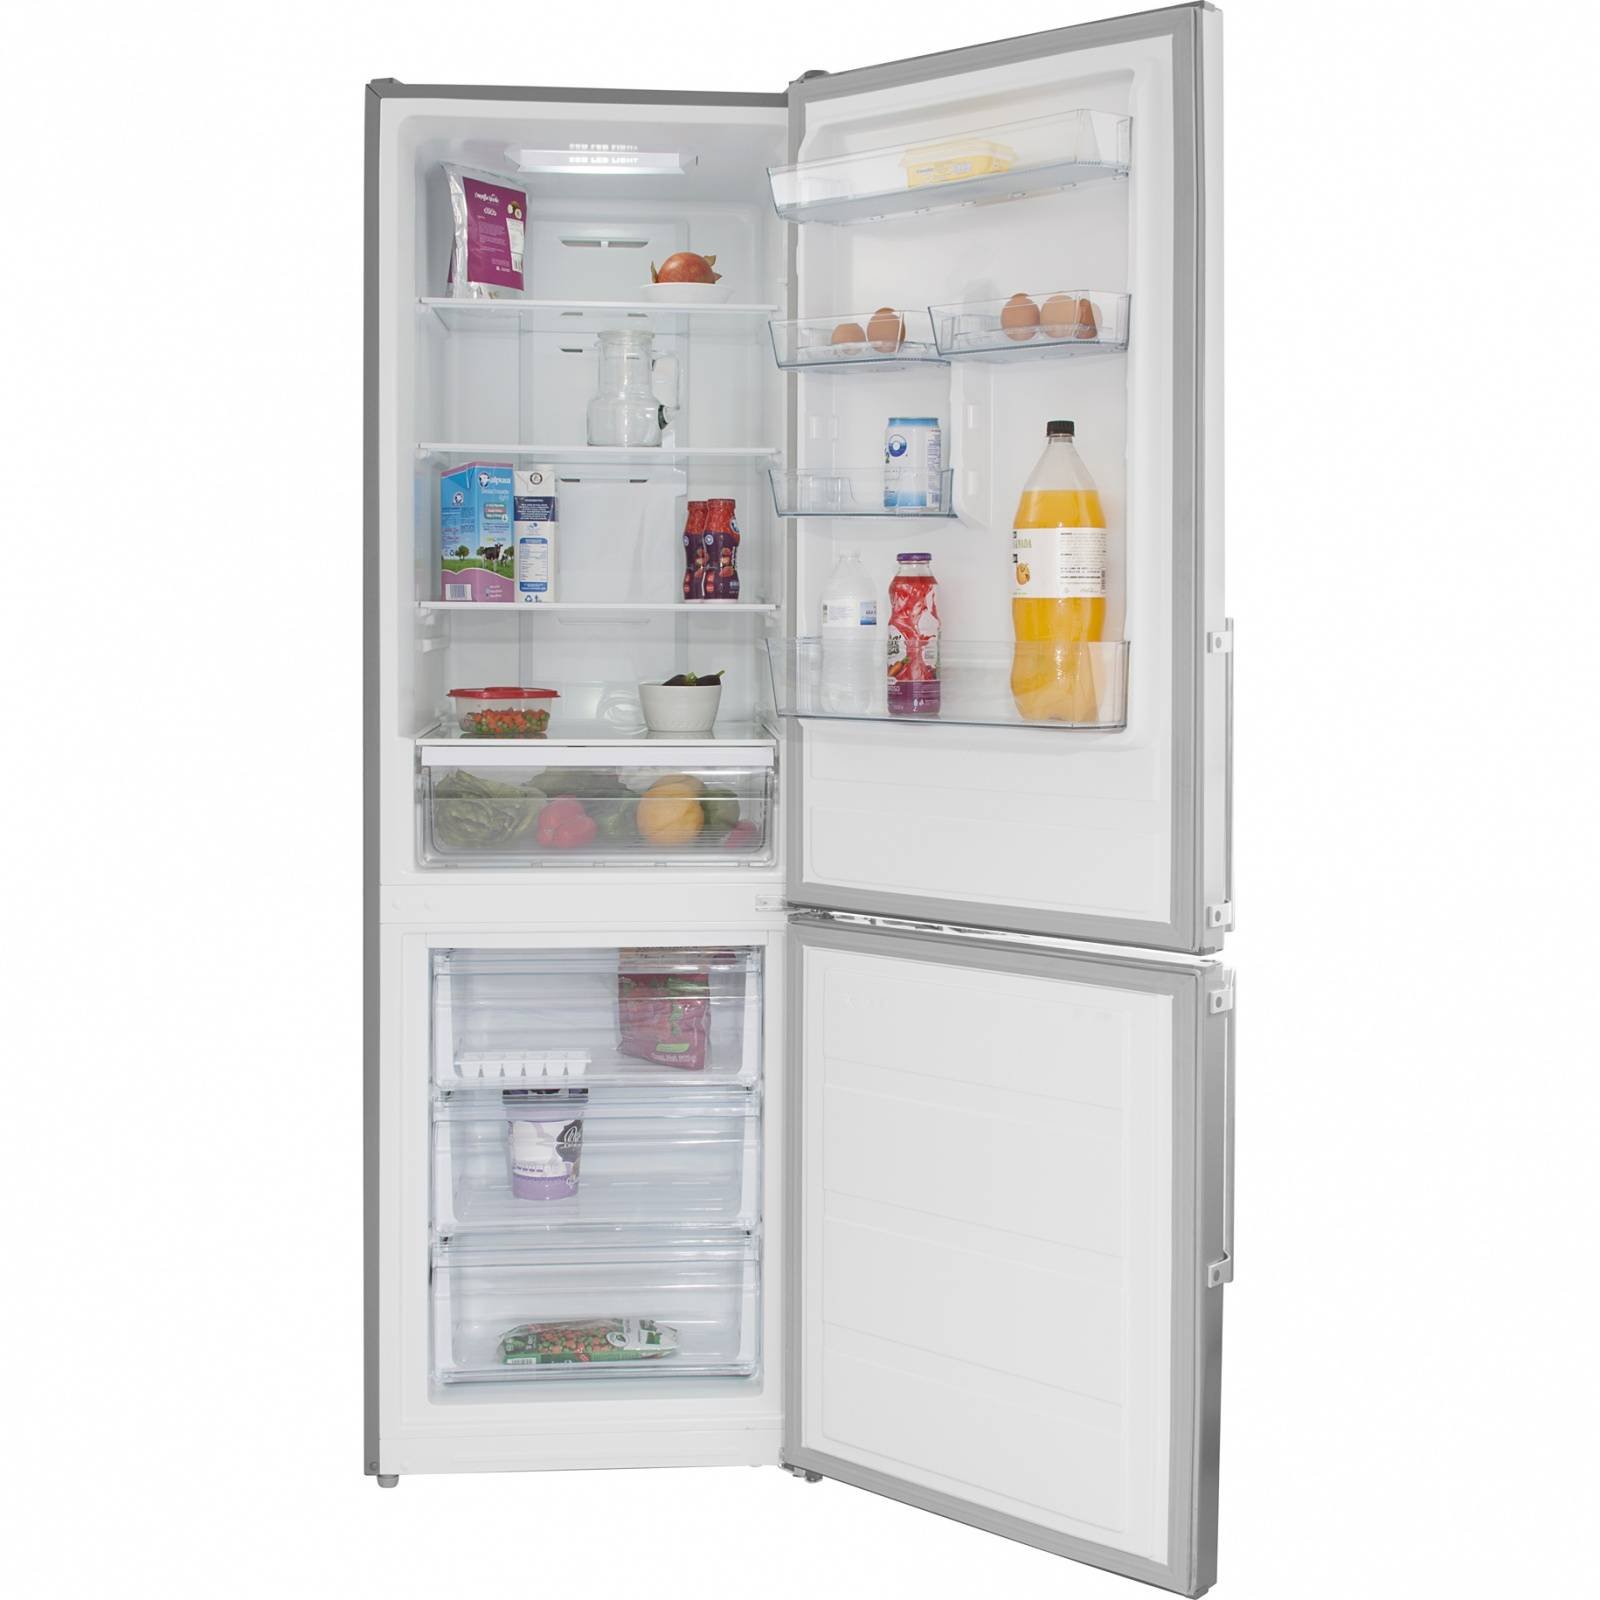 Refrigerador Teka Linea Blanca Nfl 340 Inox 40672012